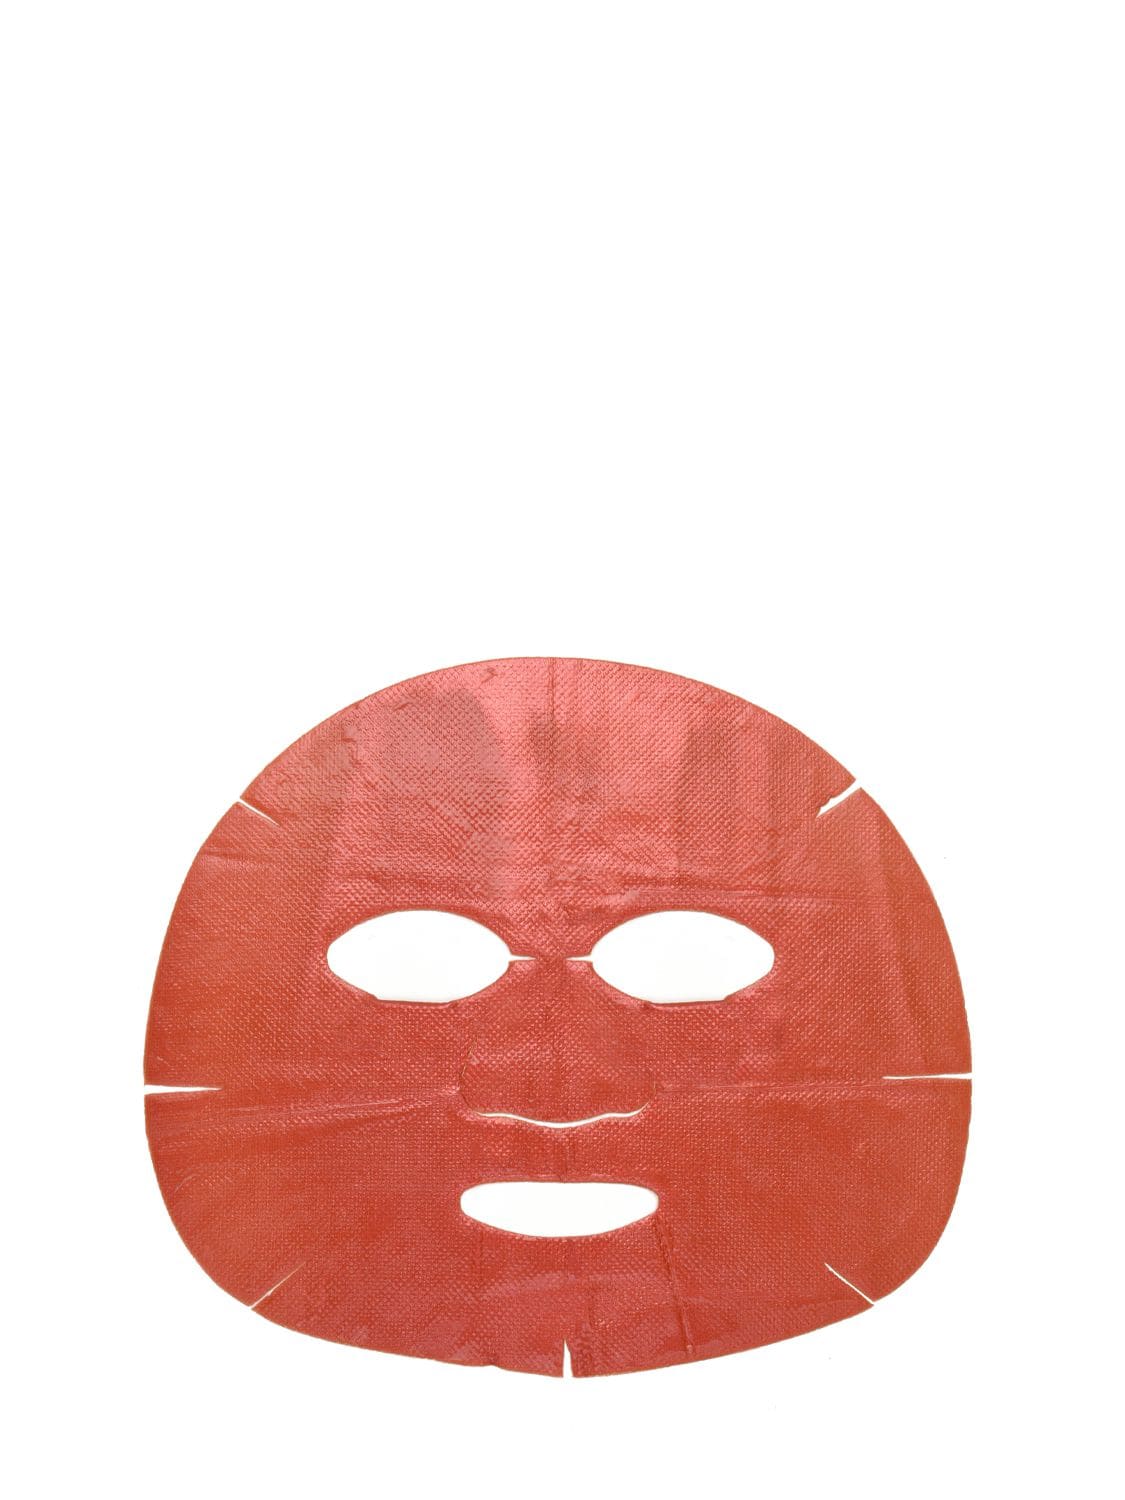 Image of 5 Vitamin Infused Facial Treatment Masks